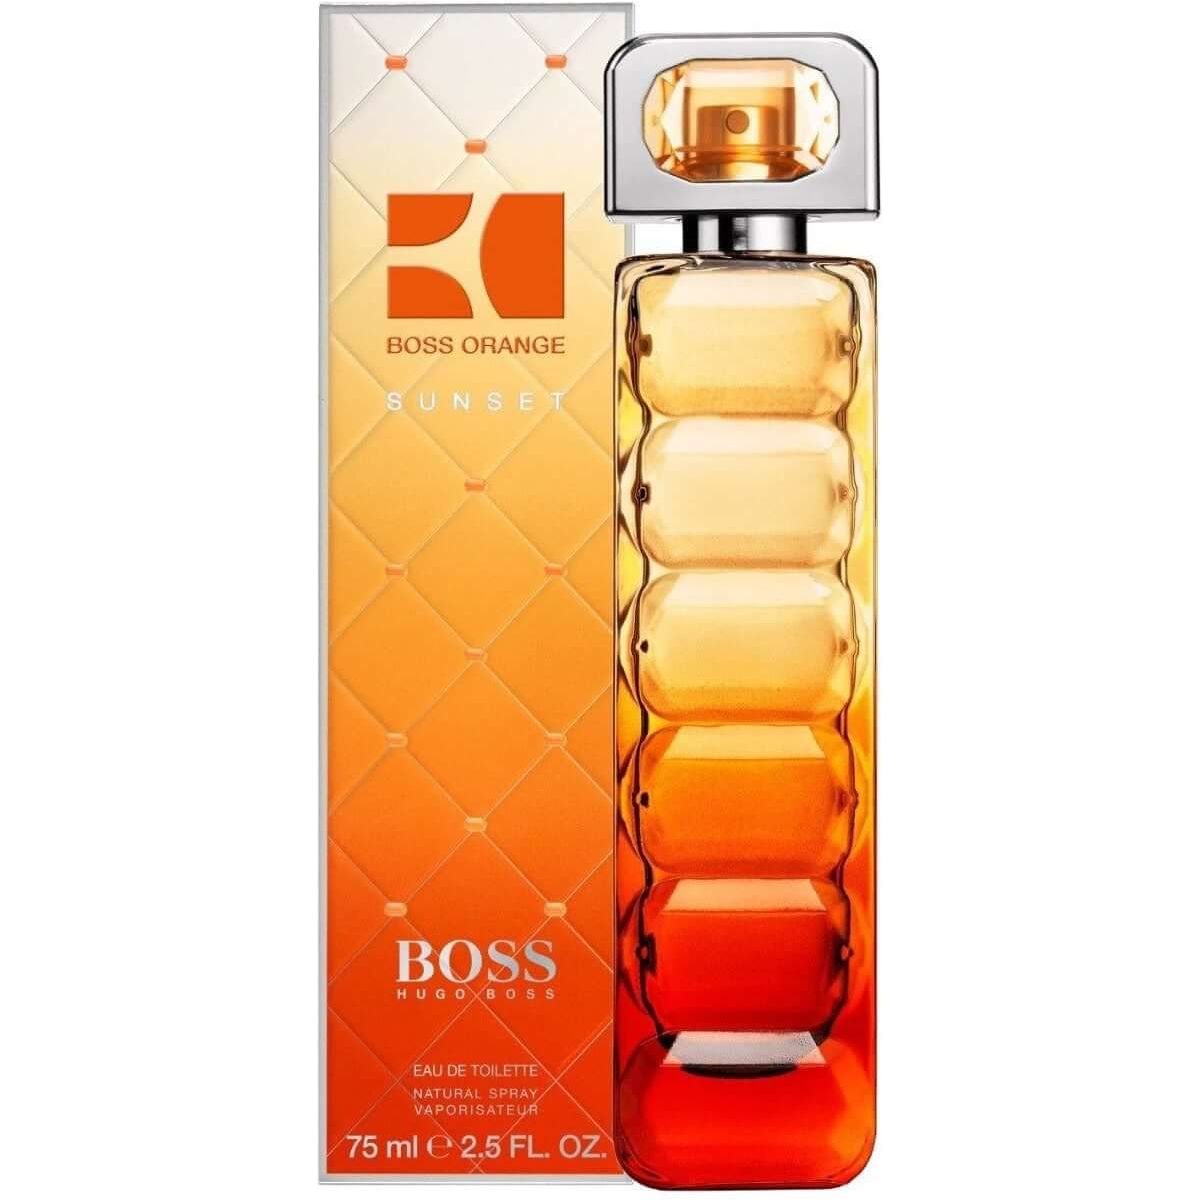 boss orange sunset perfume